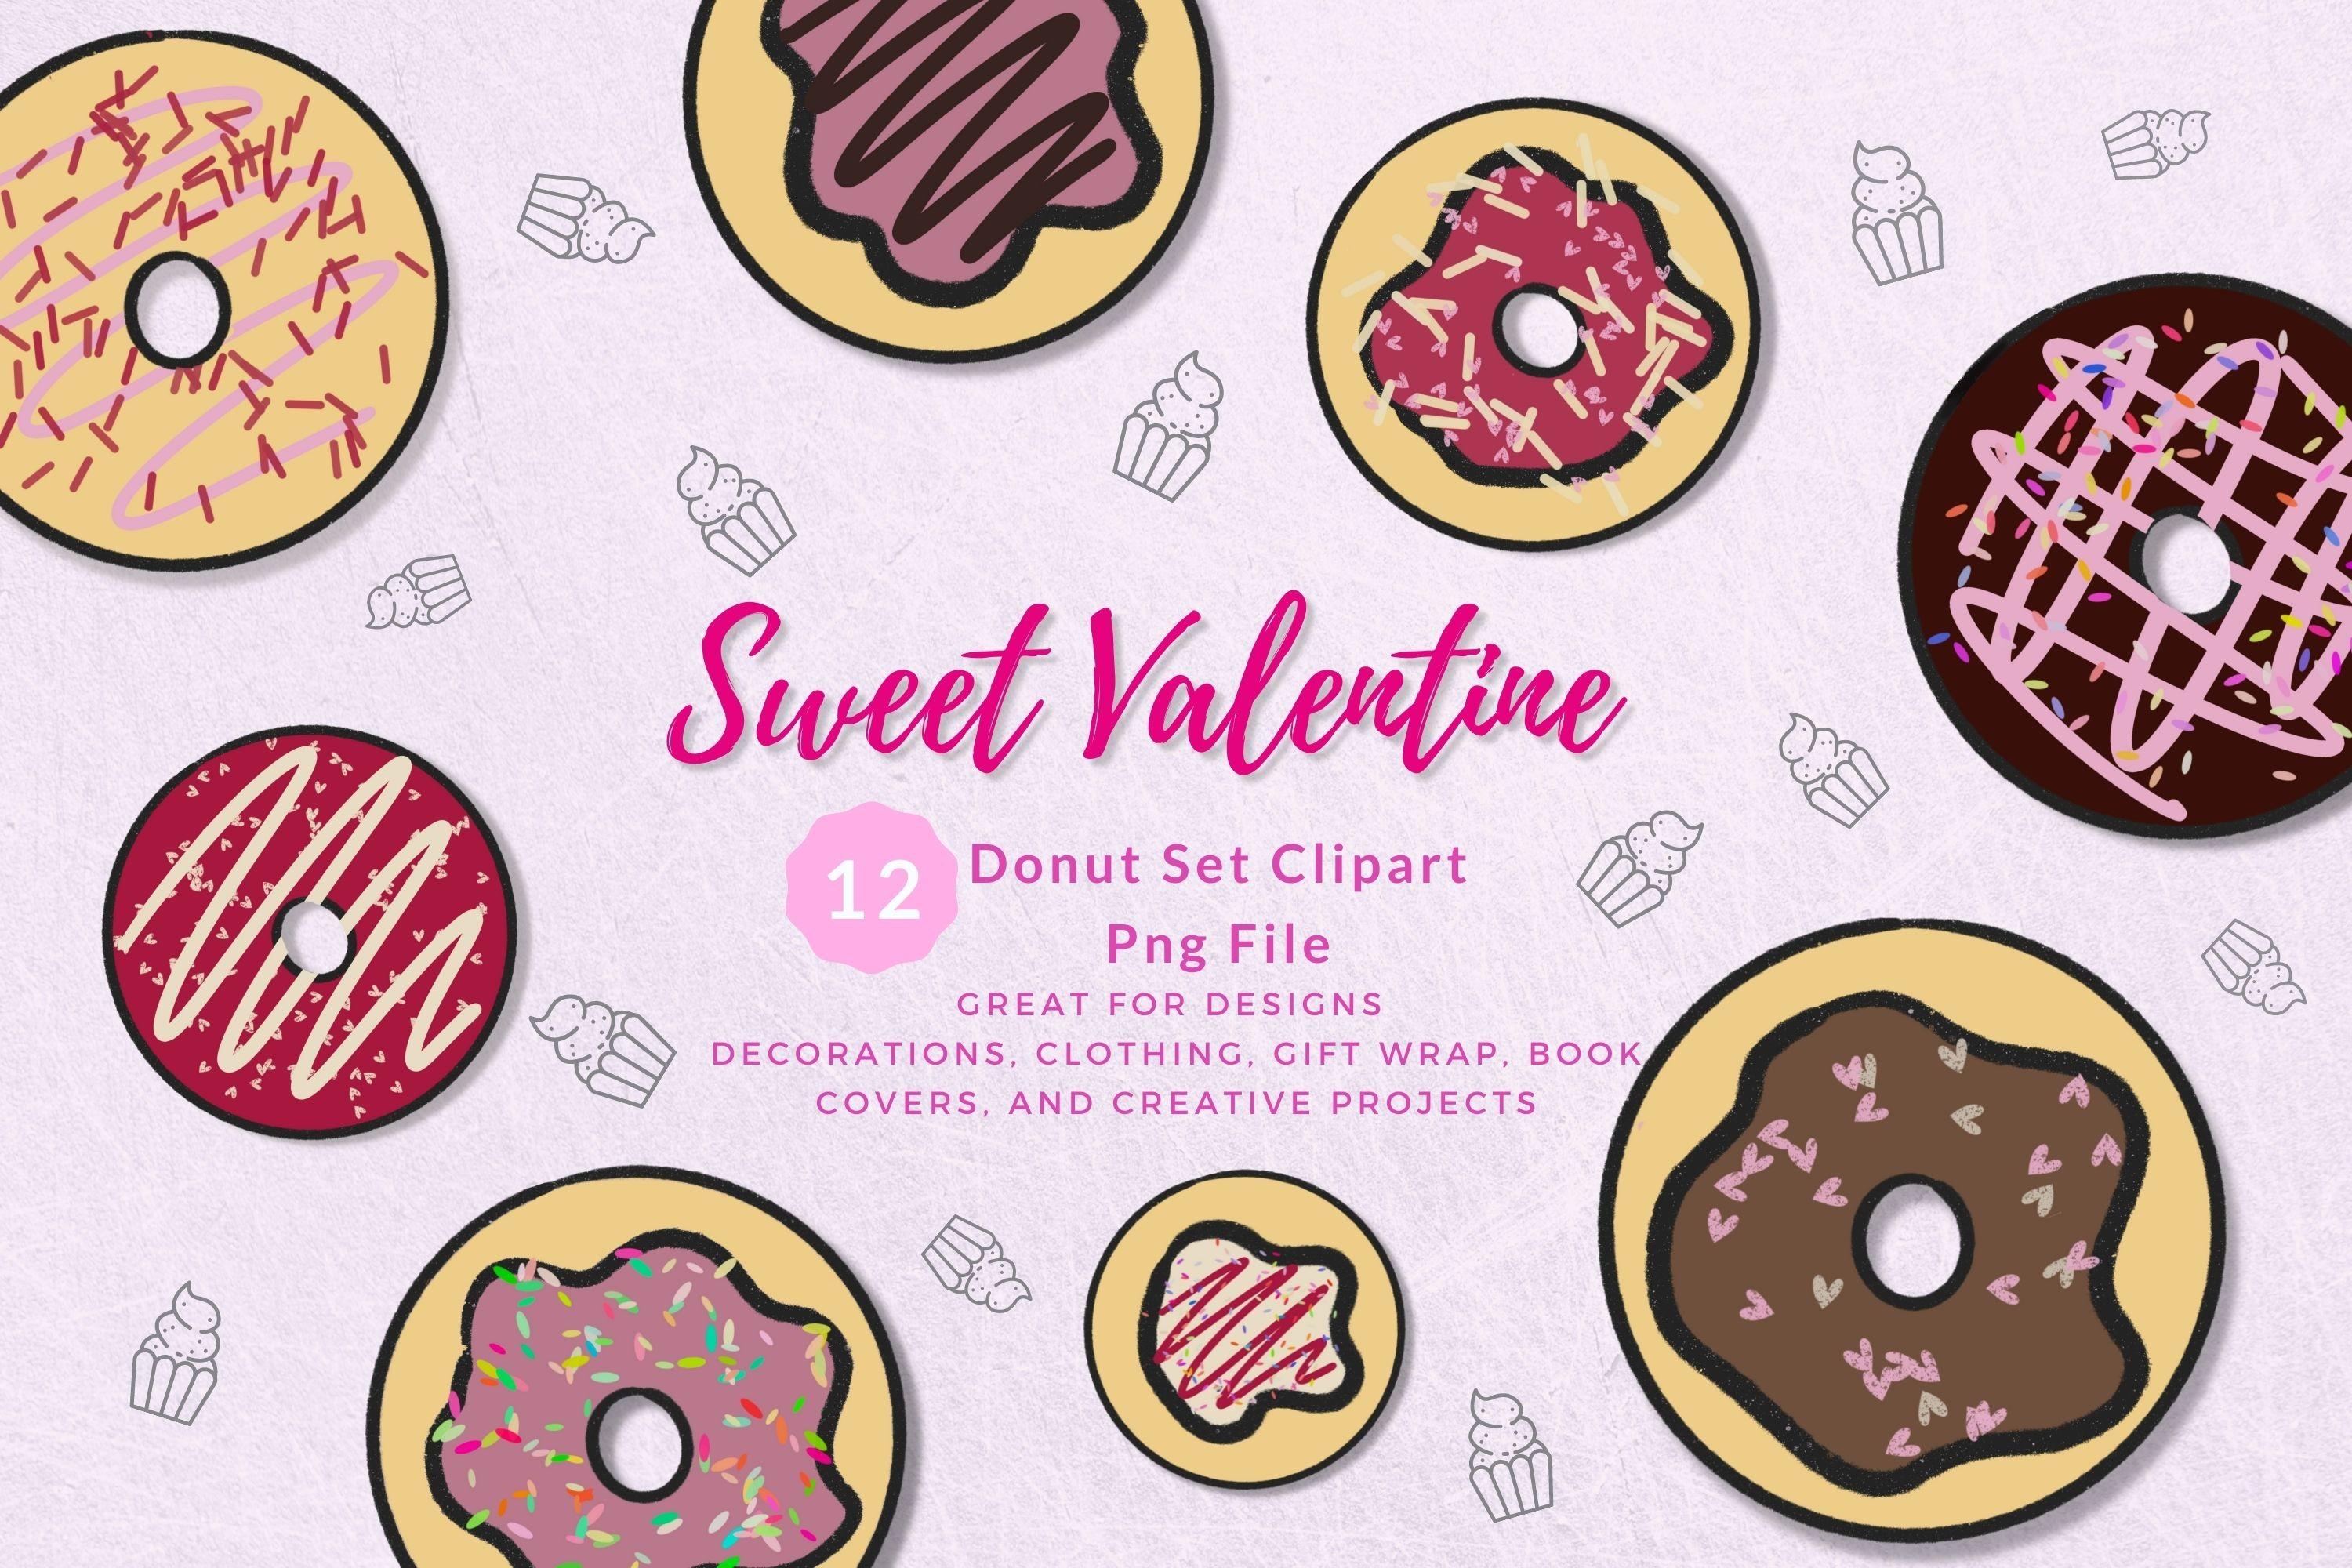 Sweet Valentine Donut Set Clipart